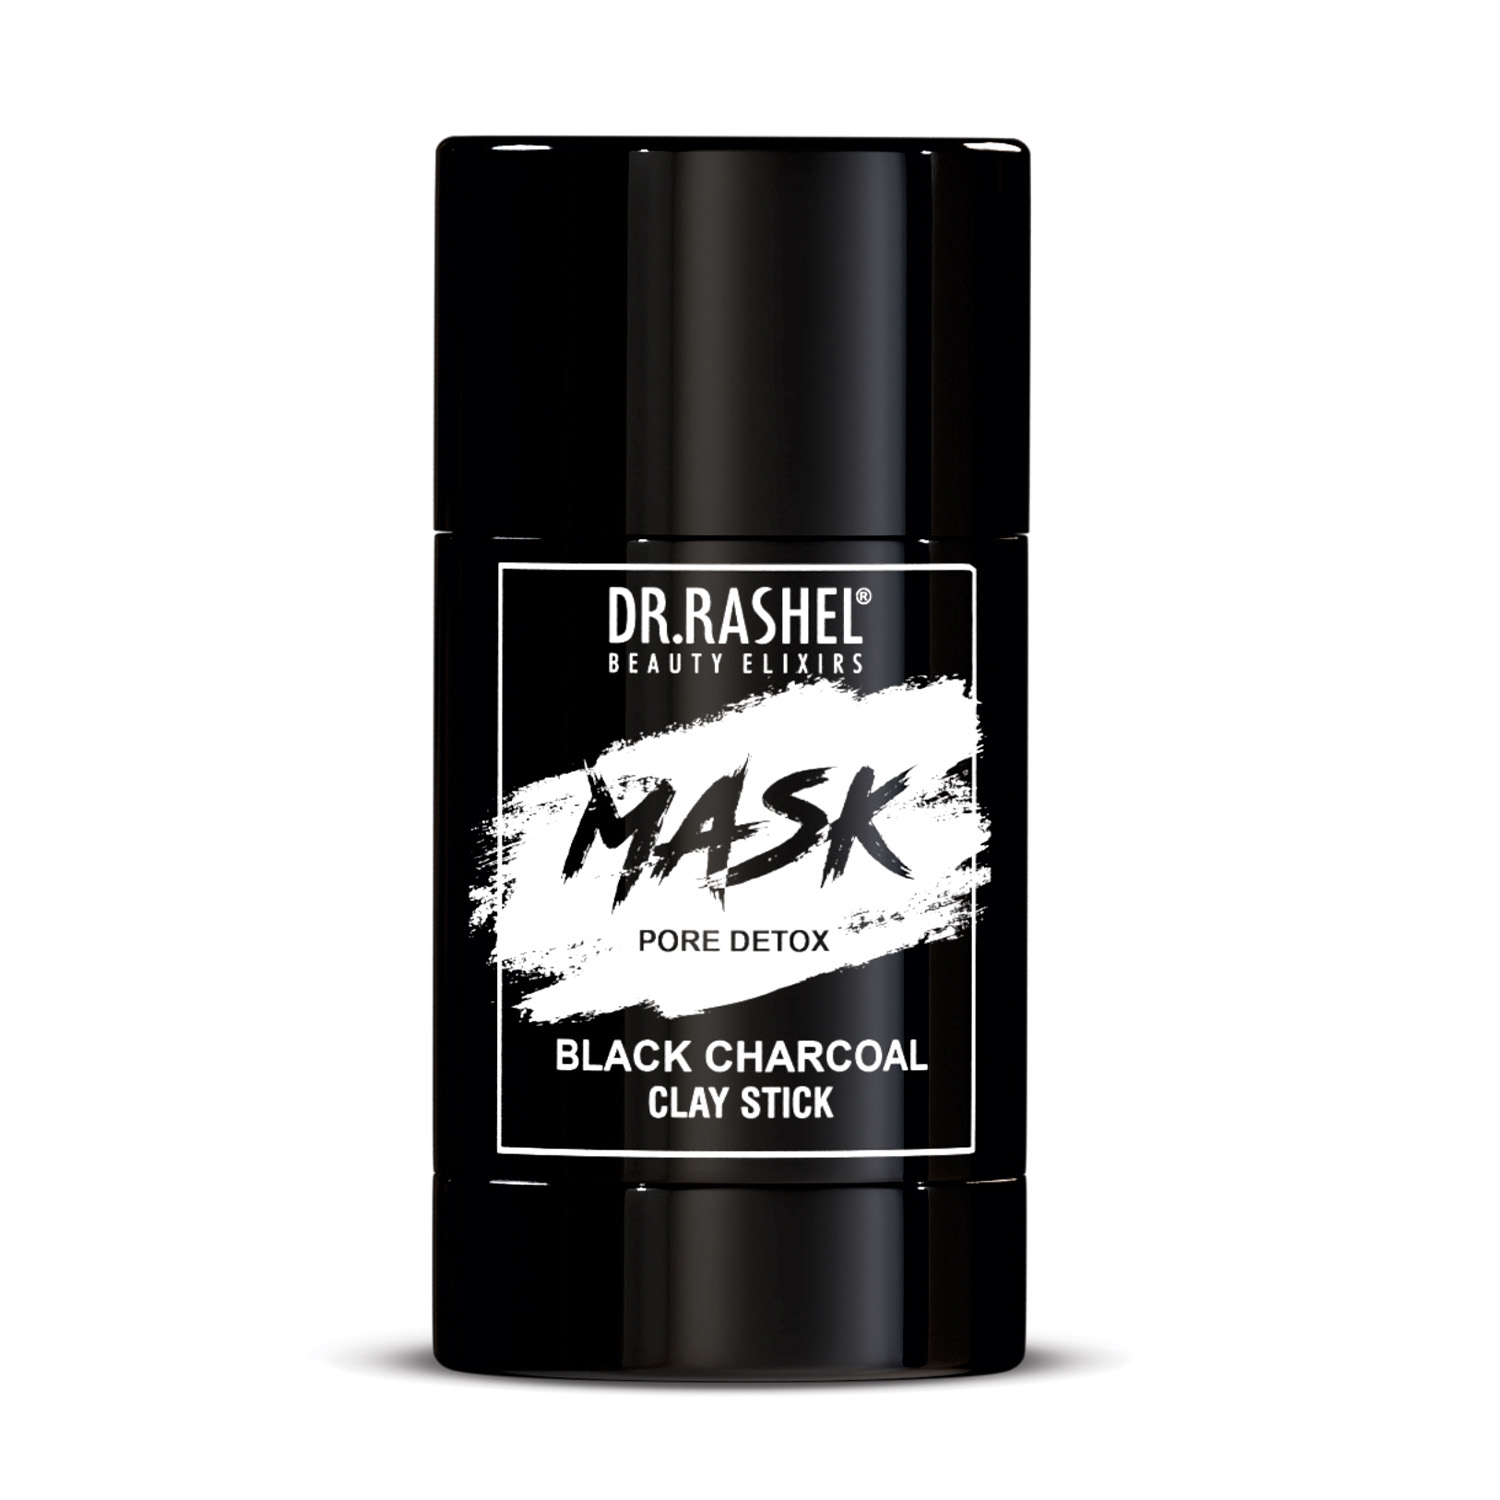 Dr.Rashel Clay Stick Mask, 80gm - Pack of 1-Black Charcoal